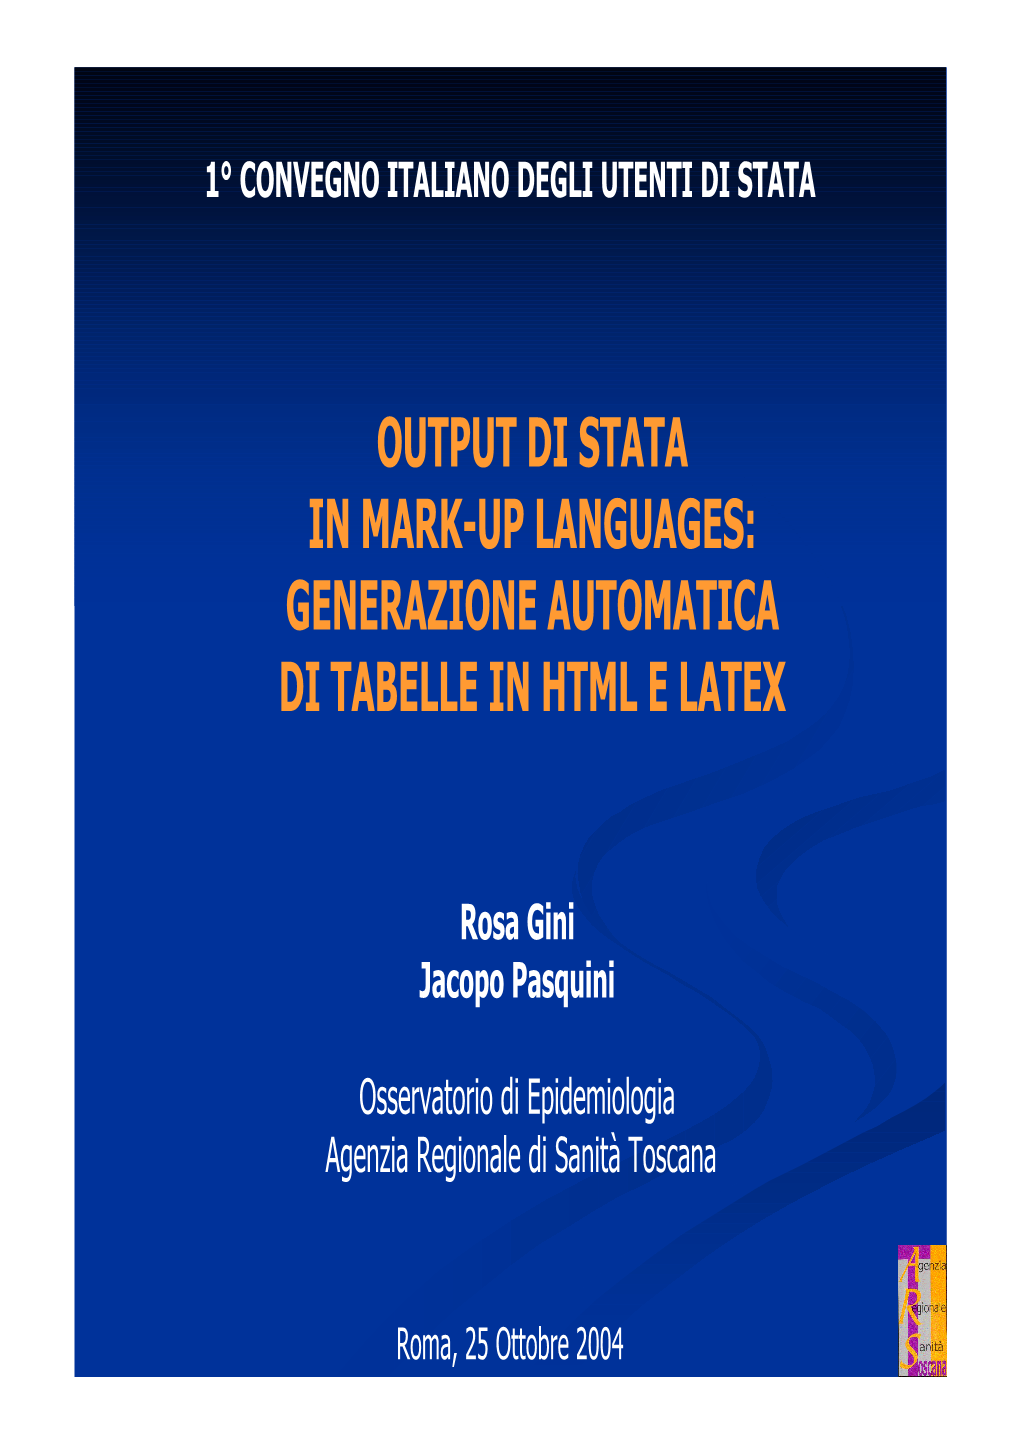 Output Di Stata in Mark-Up Languages: Generazione Automatica Di Tabelle in Html E Latex